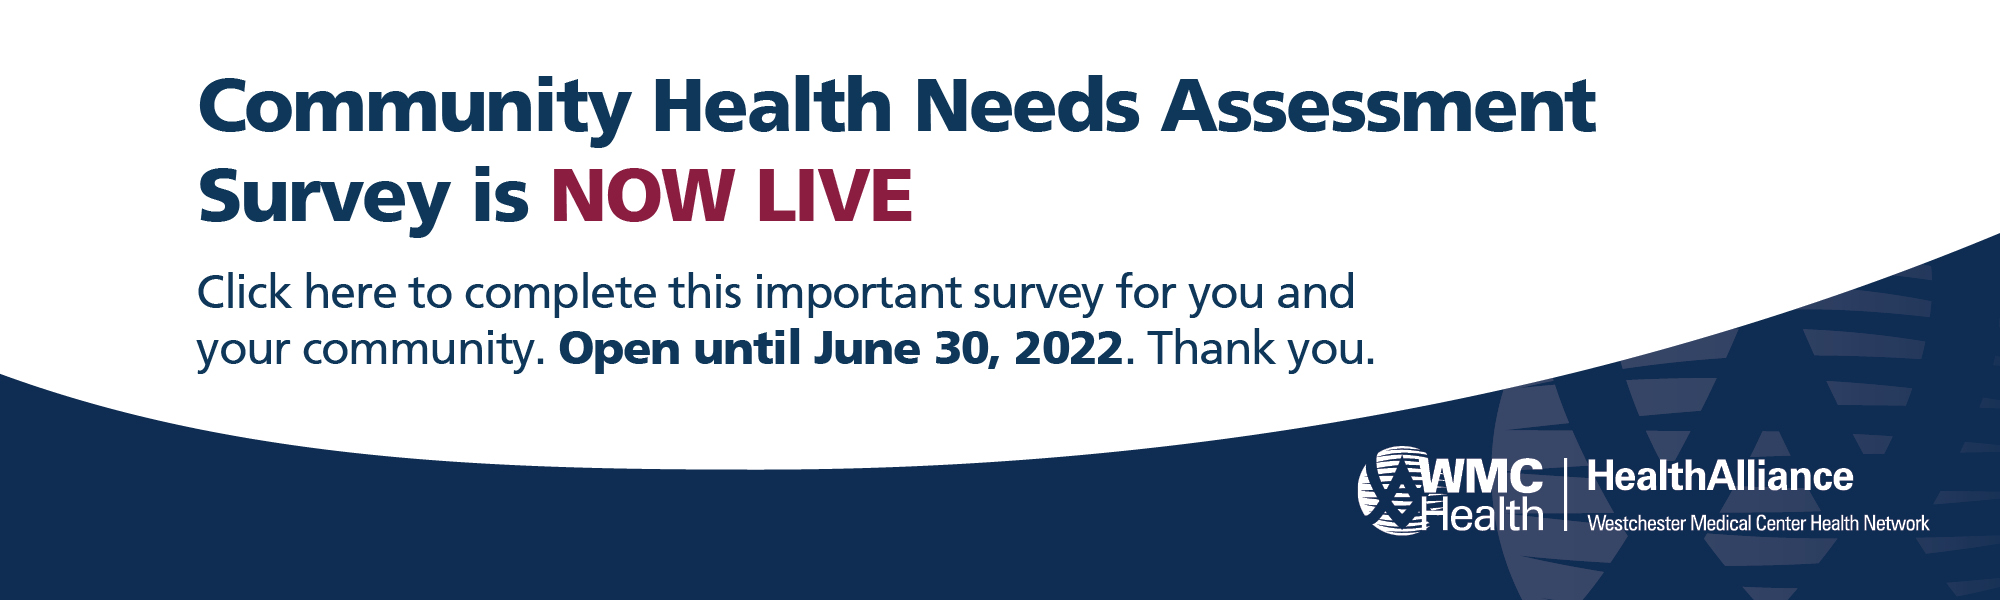 Community Health Needs Assessment Survey